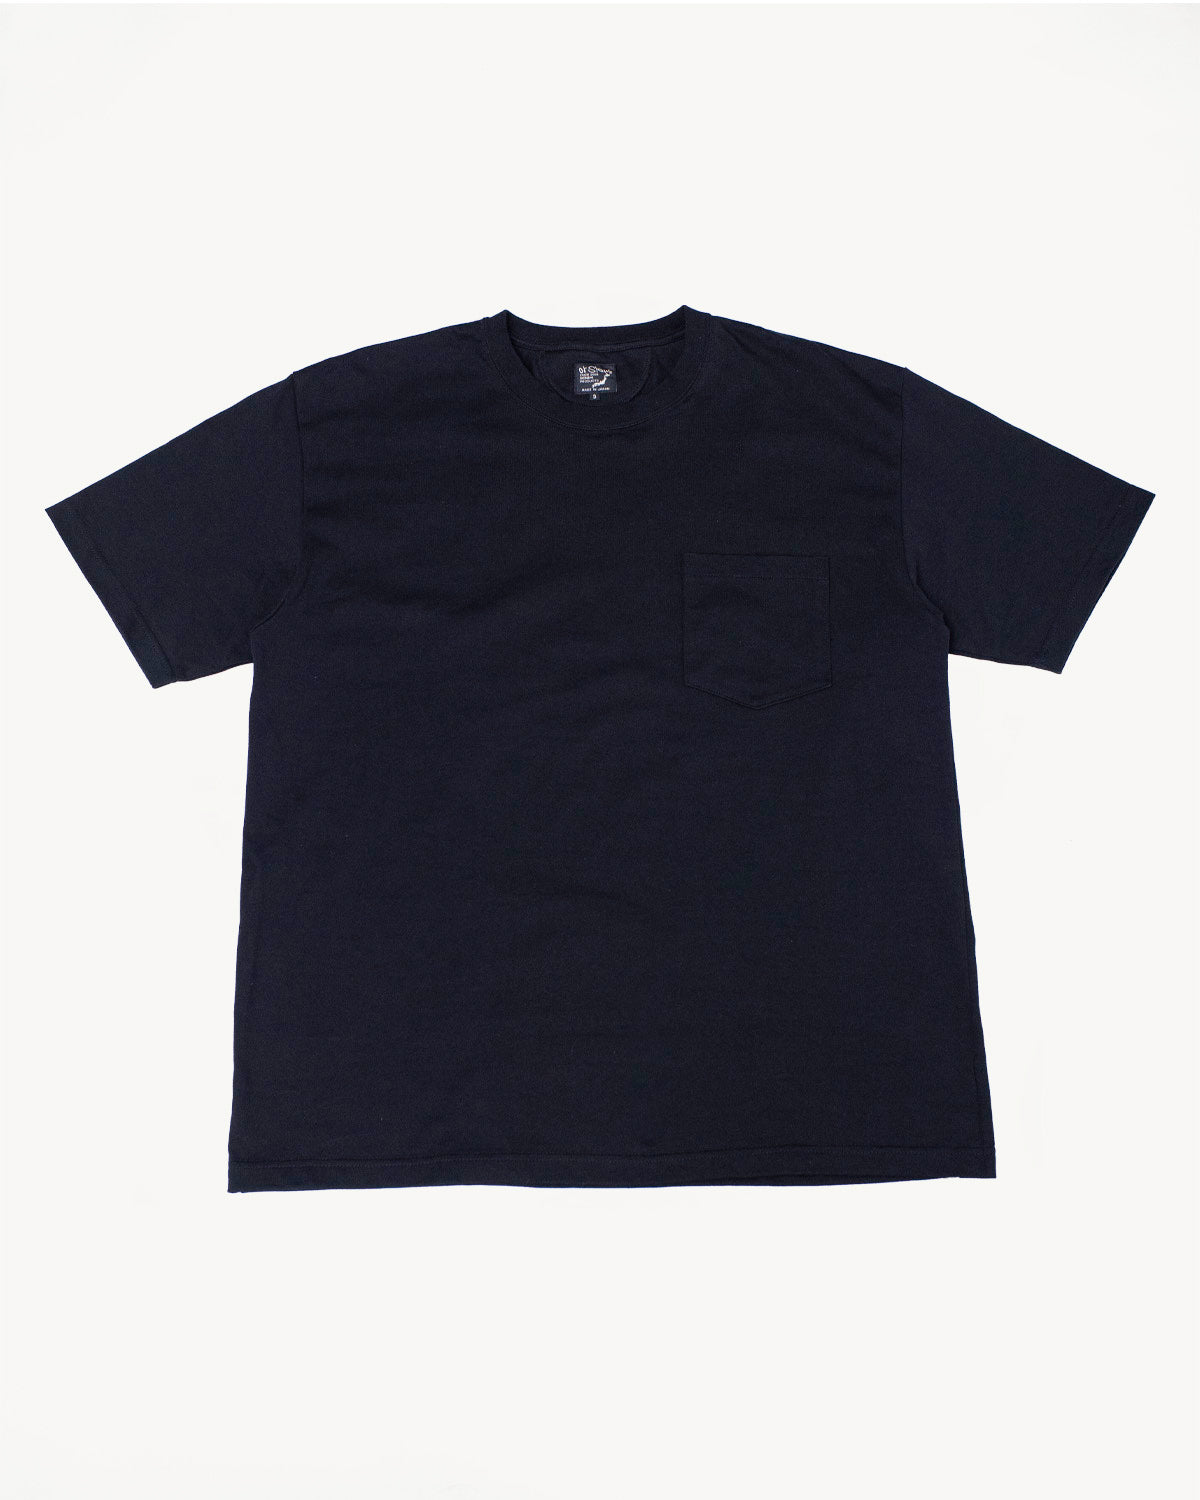 03-0017-61 - Pocket T-Shirt - Black